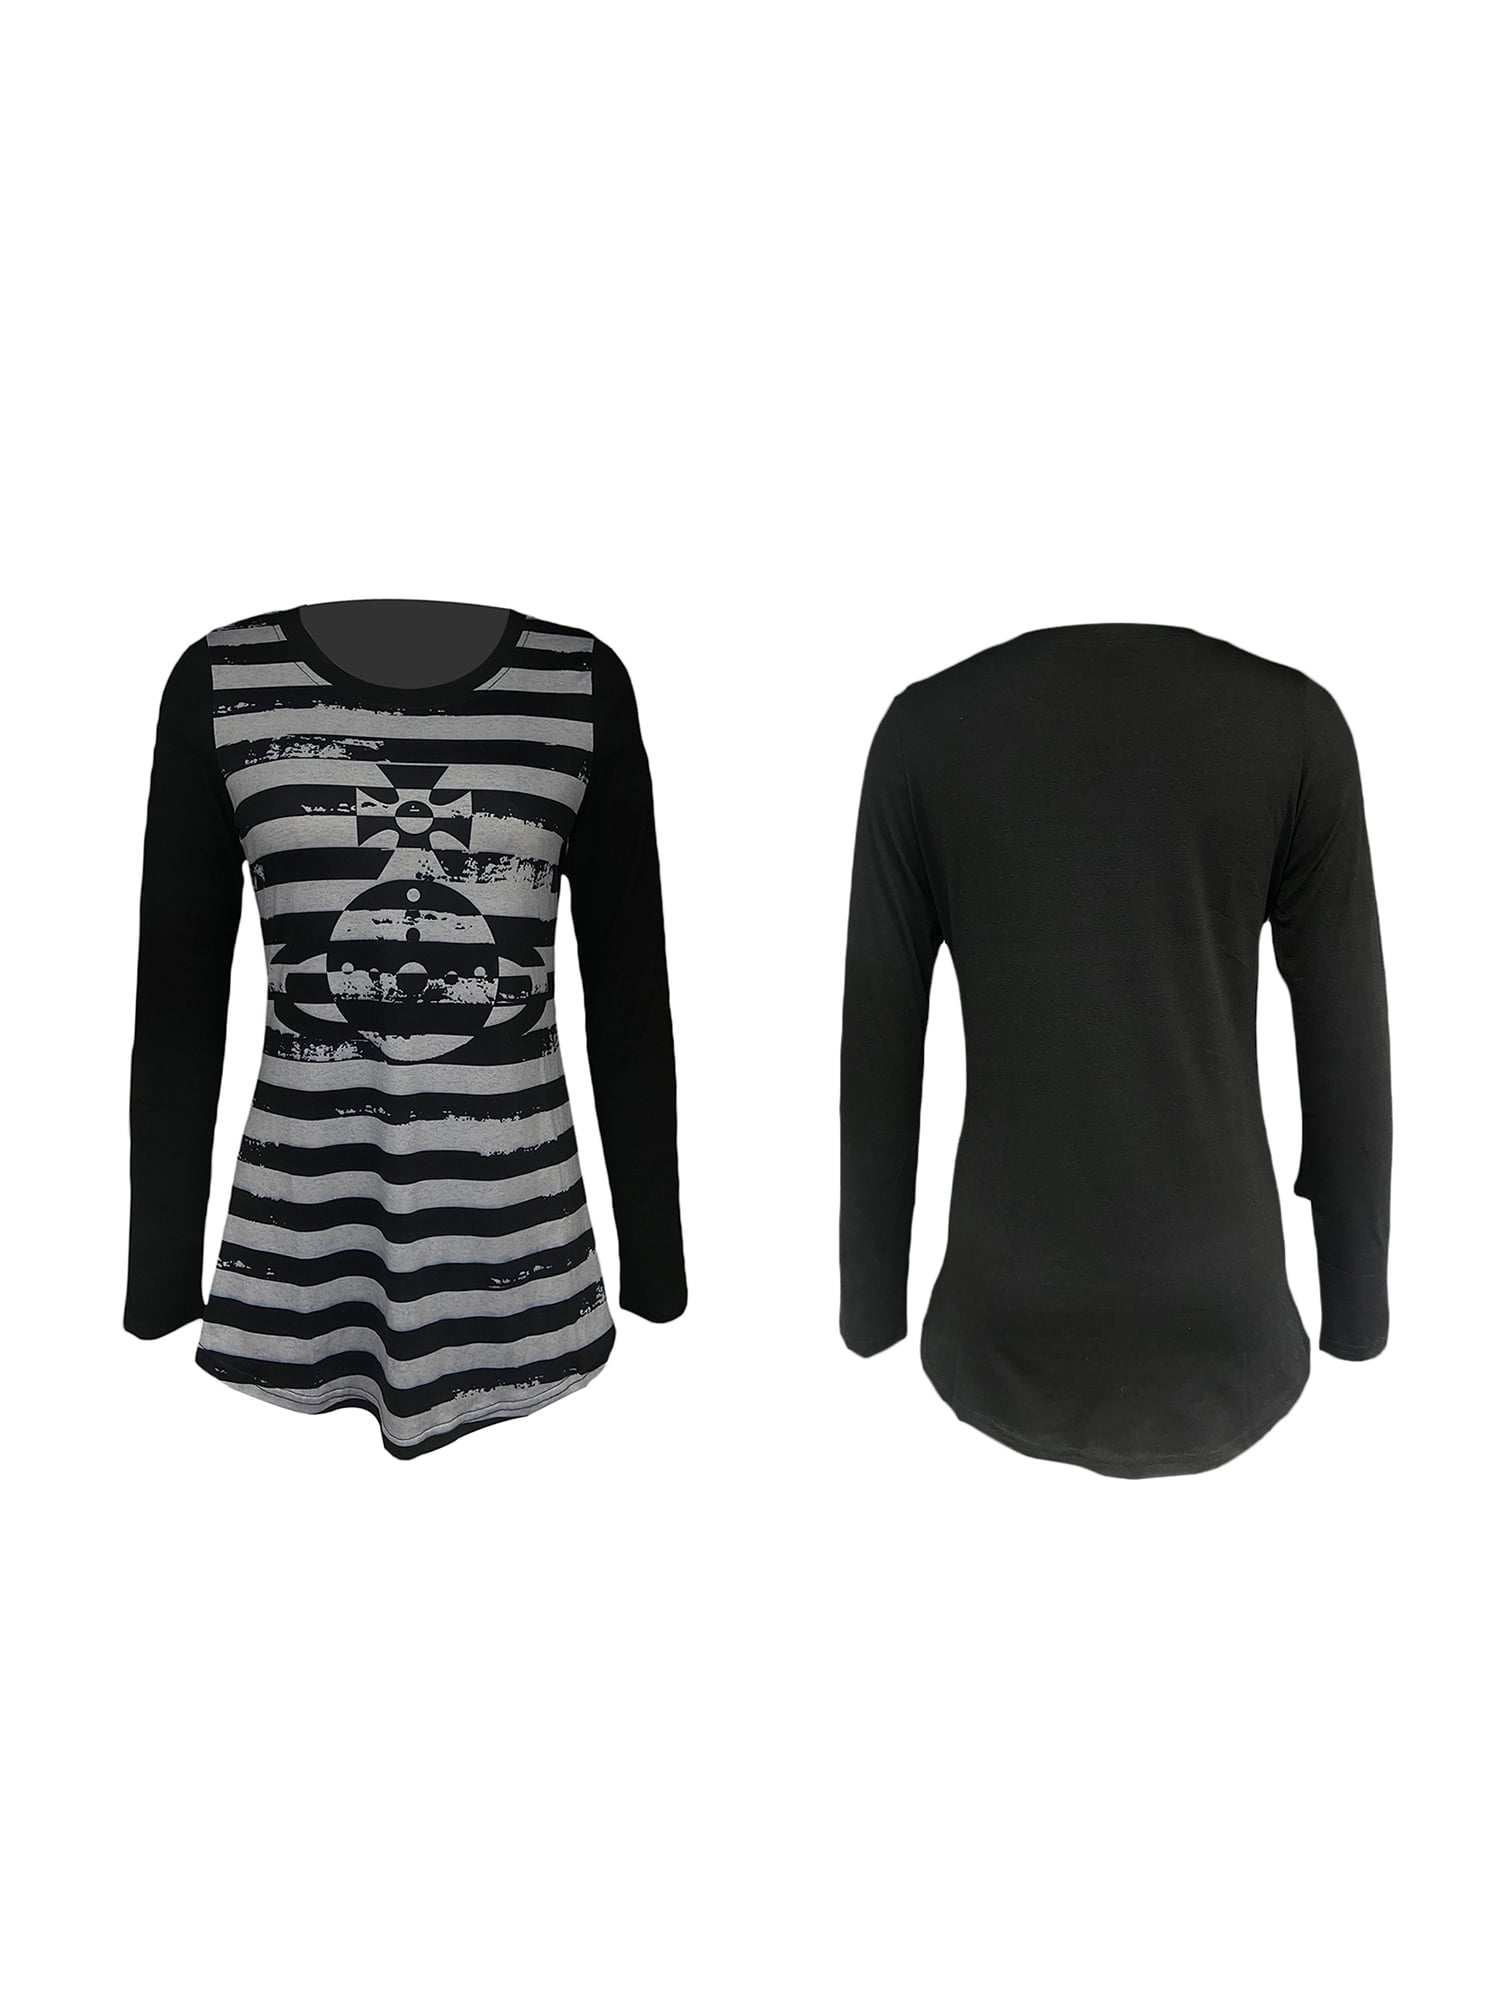 JYYYBF E-girl Gothic 00s Retro Grunge T-shirt Dark Academia Graphic Print  Striped Pullovers Tops Y2K Aesthetics Vintage Mall Goth Tees Black M